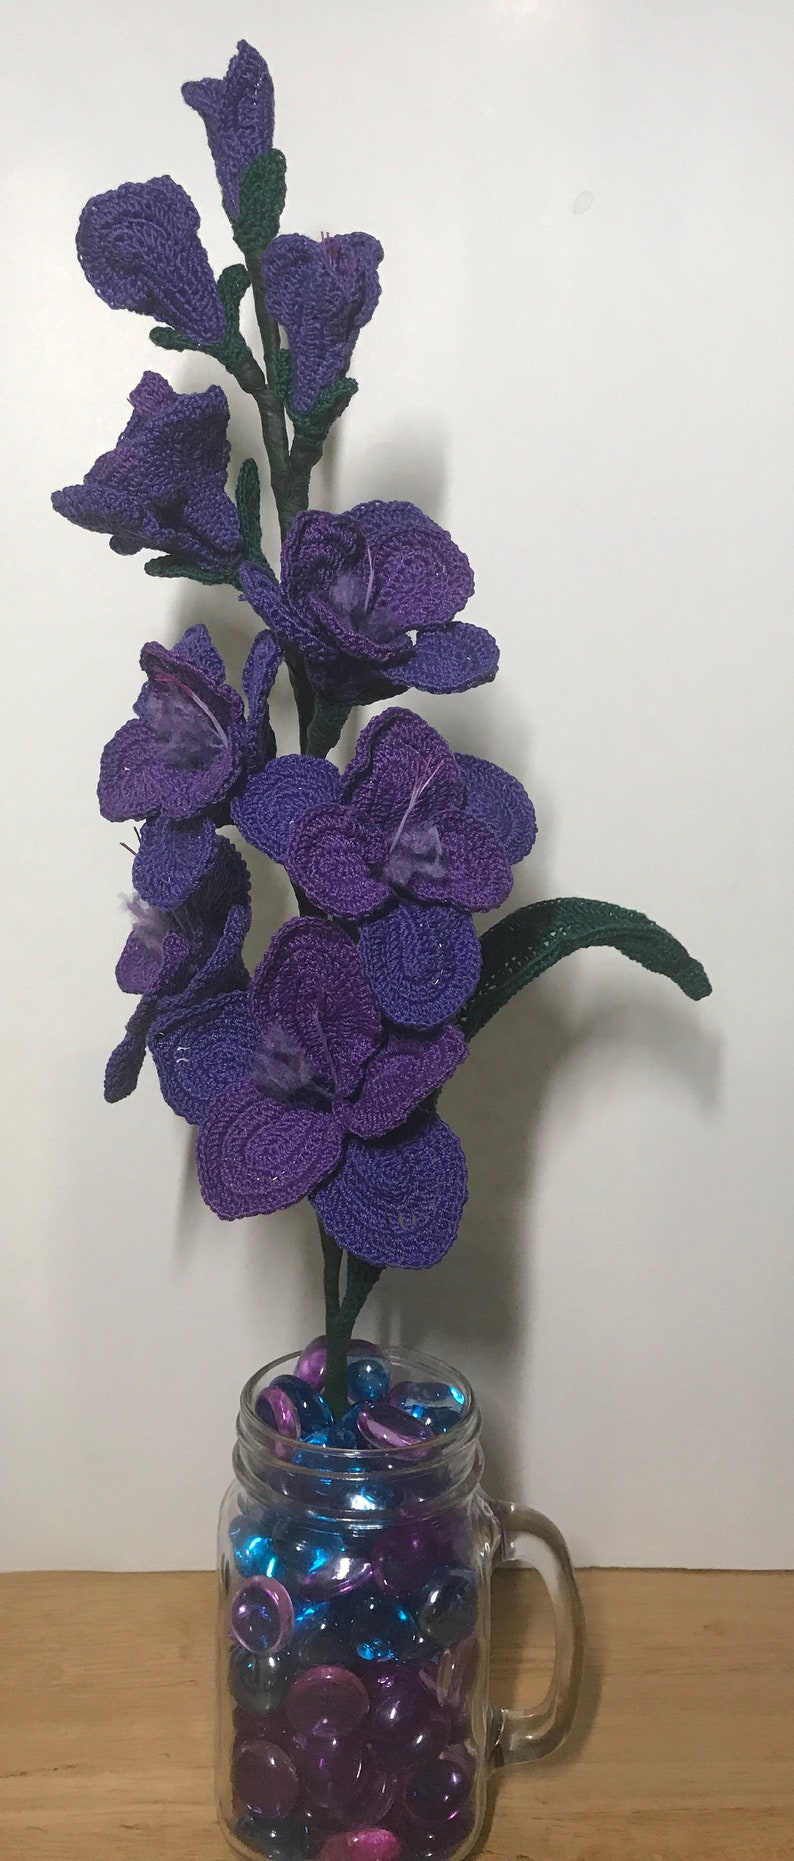 Gladiolus, Gladiolus Crochet Pattern, Gladioli, Crochet Pattern, Crochet Flowers, Pattern, gifts for her, easter, mothers day, spring decor image 4